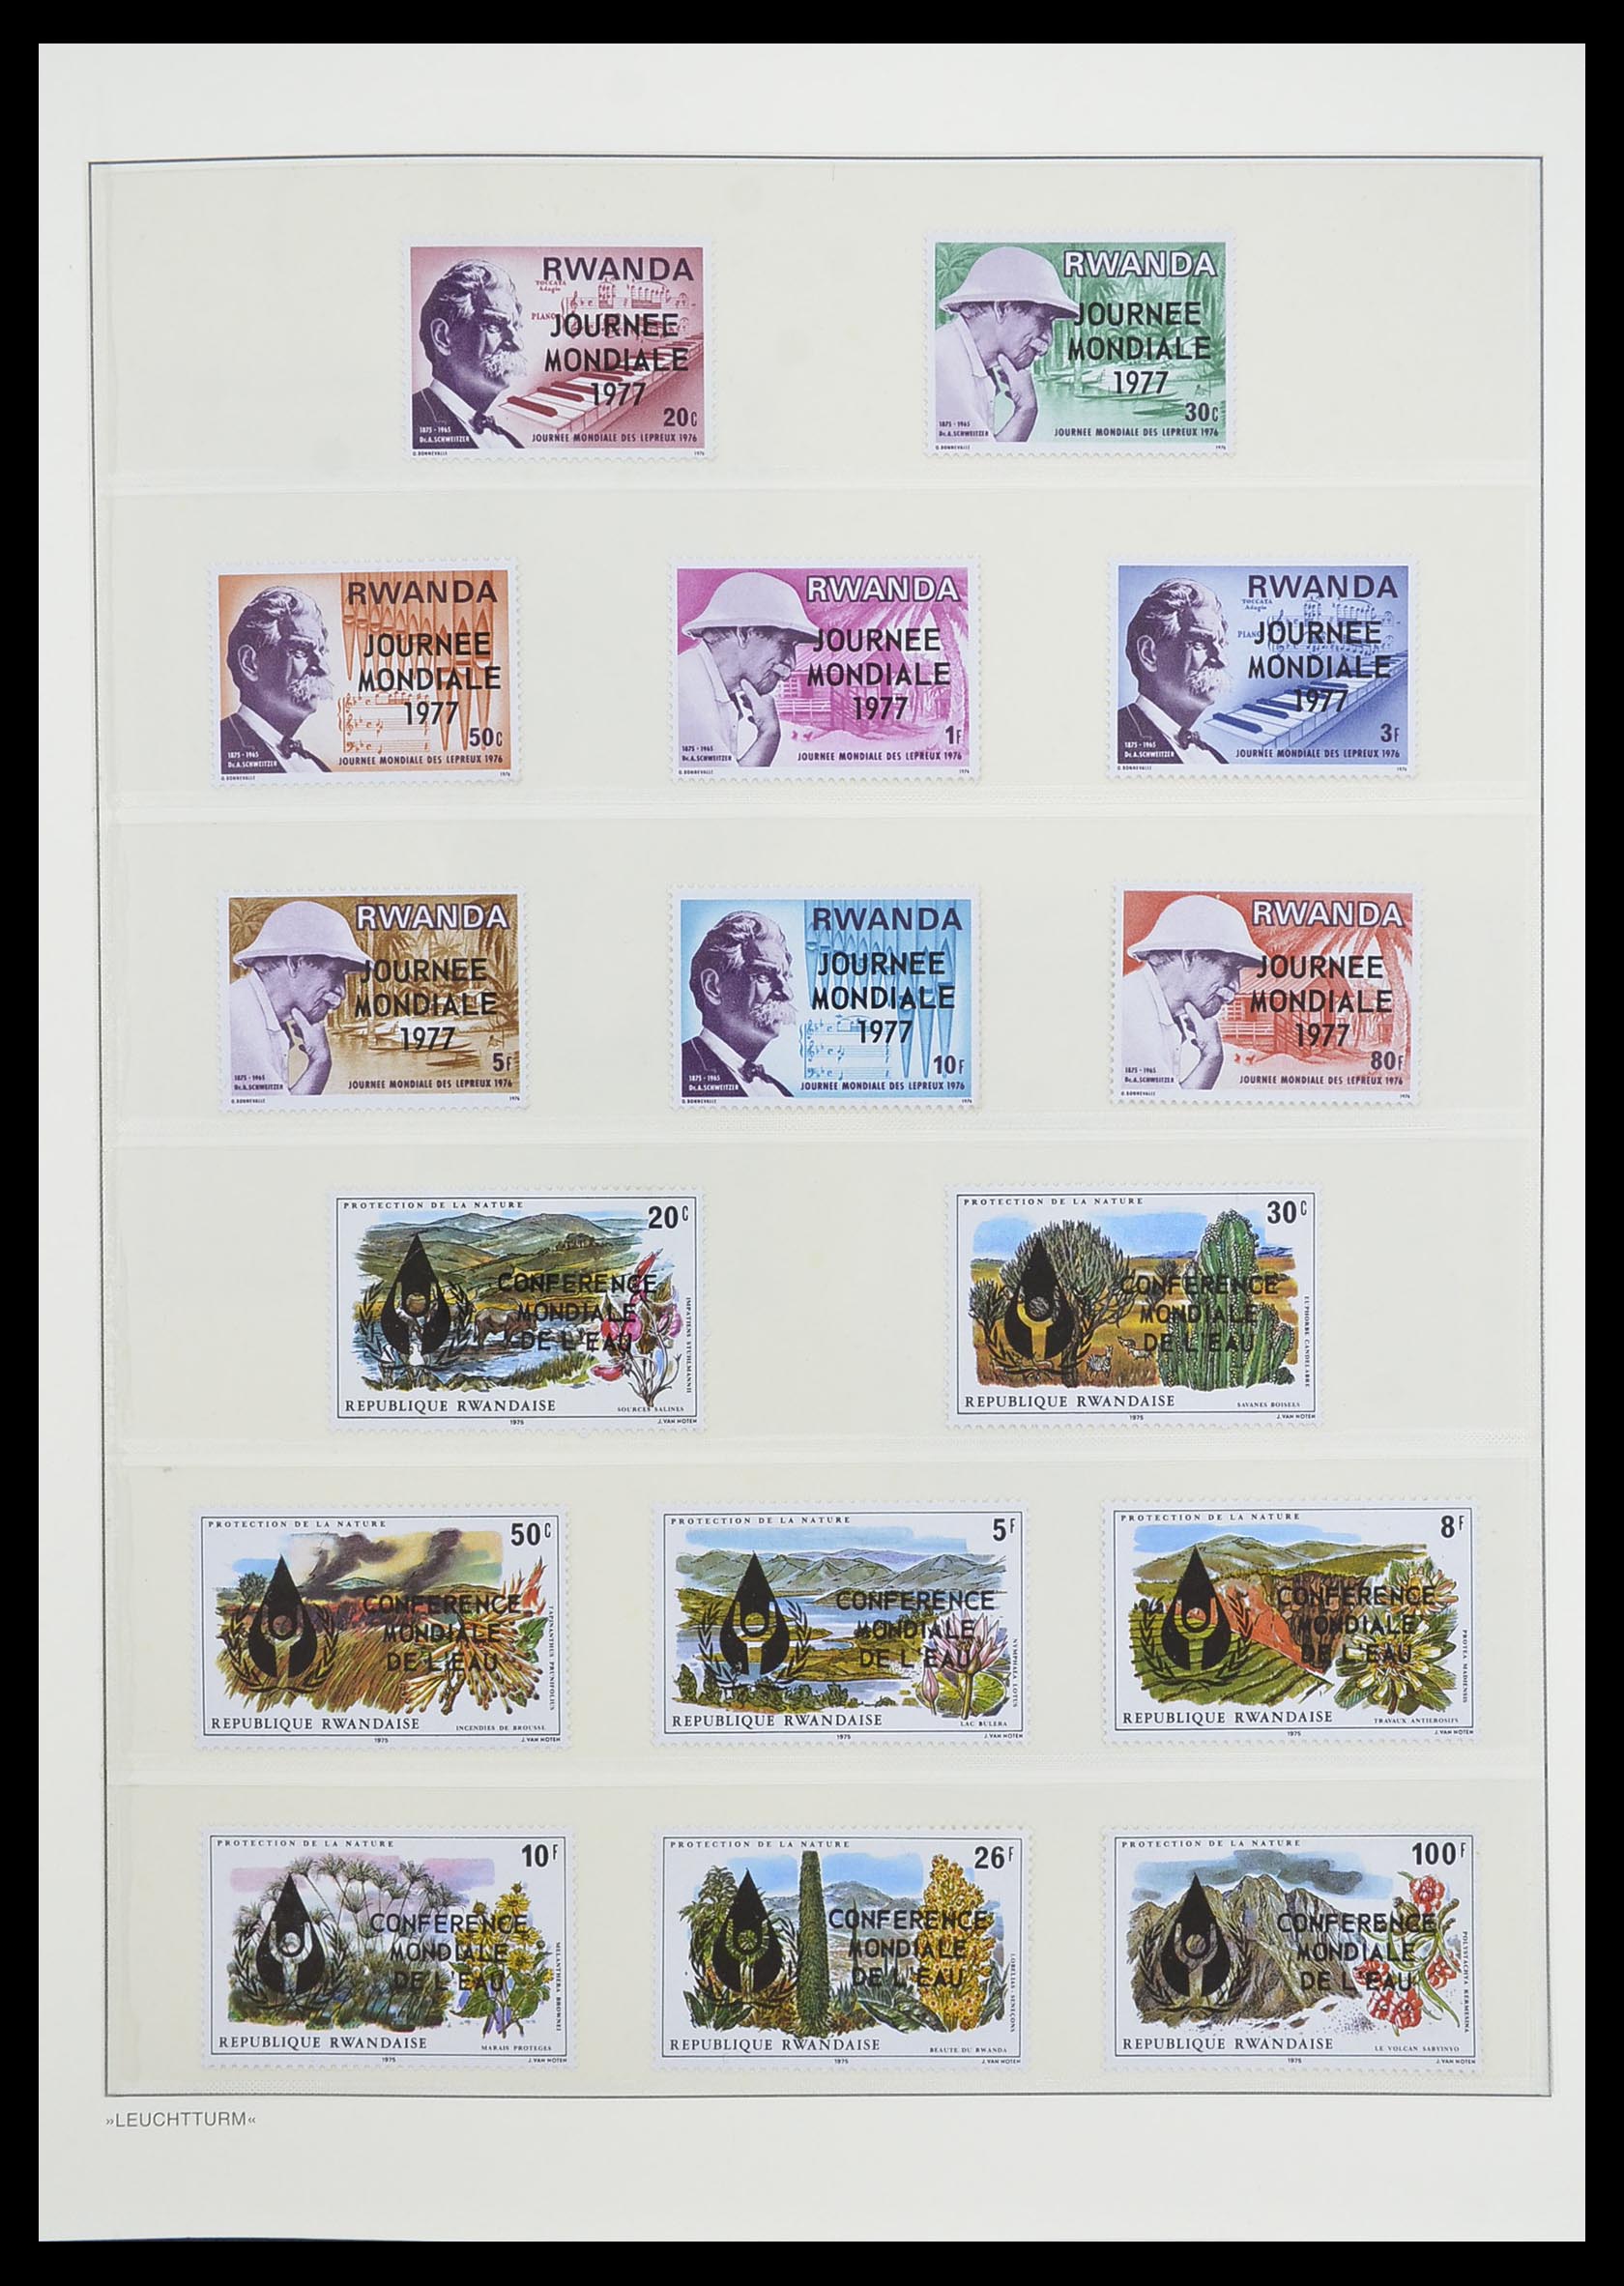 33766 088 - Stamp collection 33766 Rwanda 1962-1999.